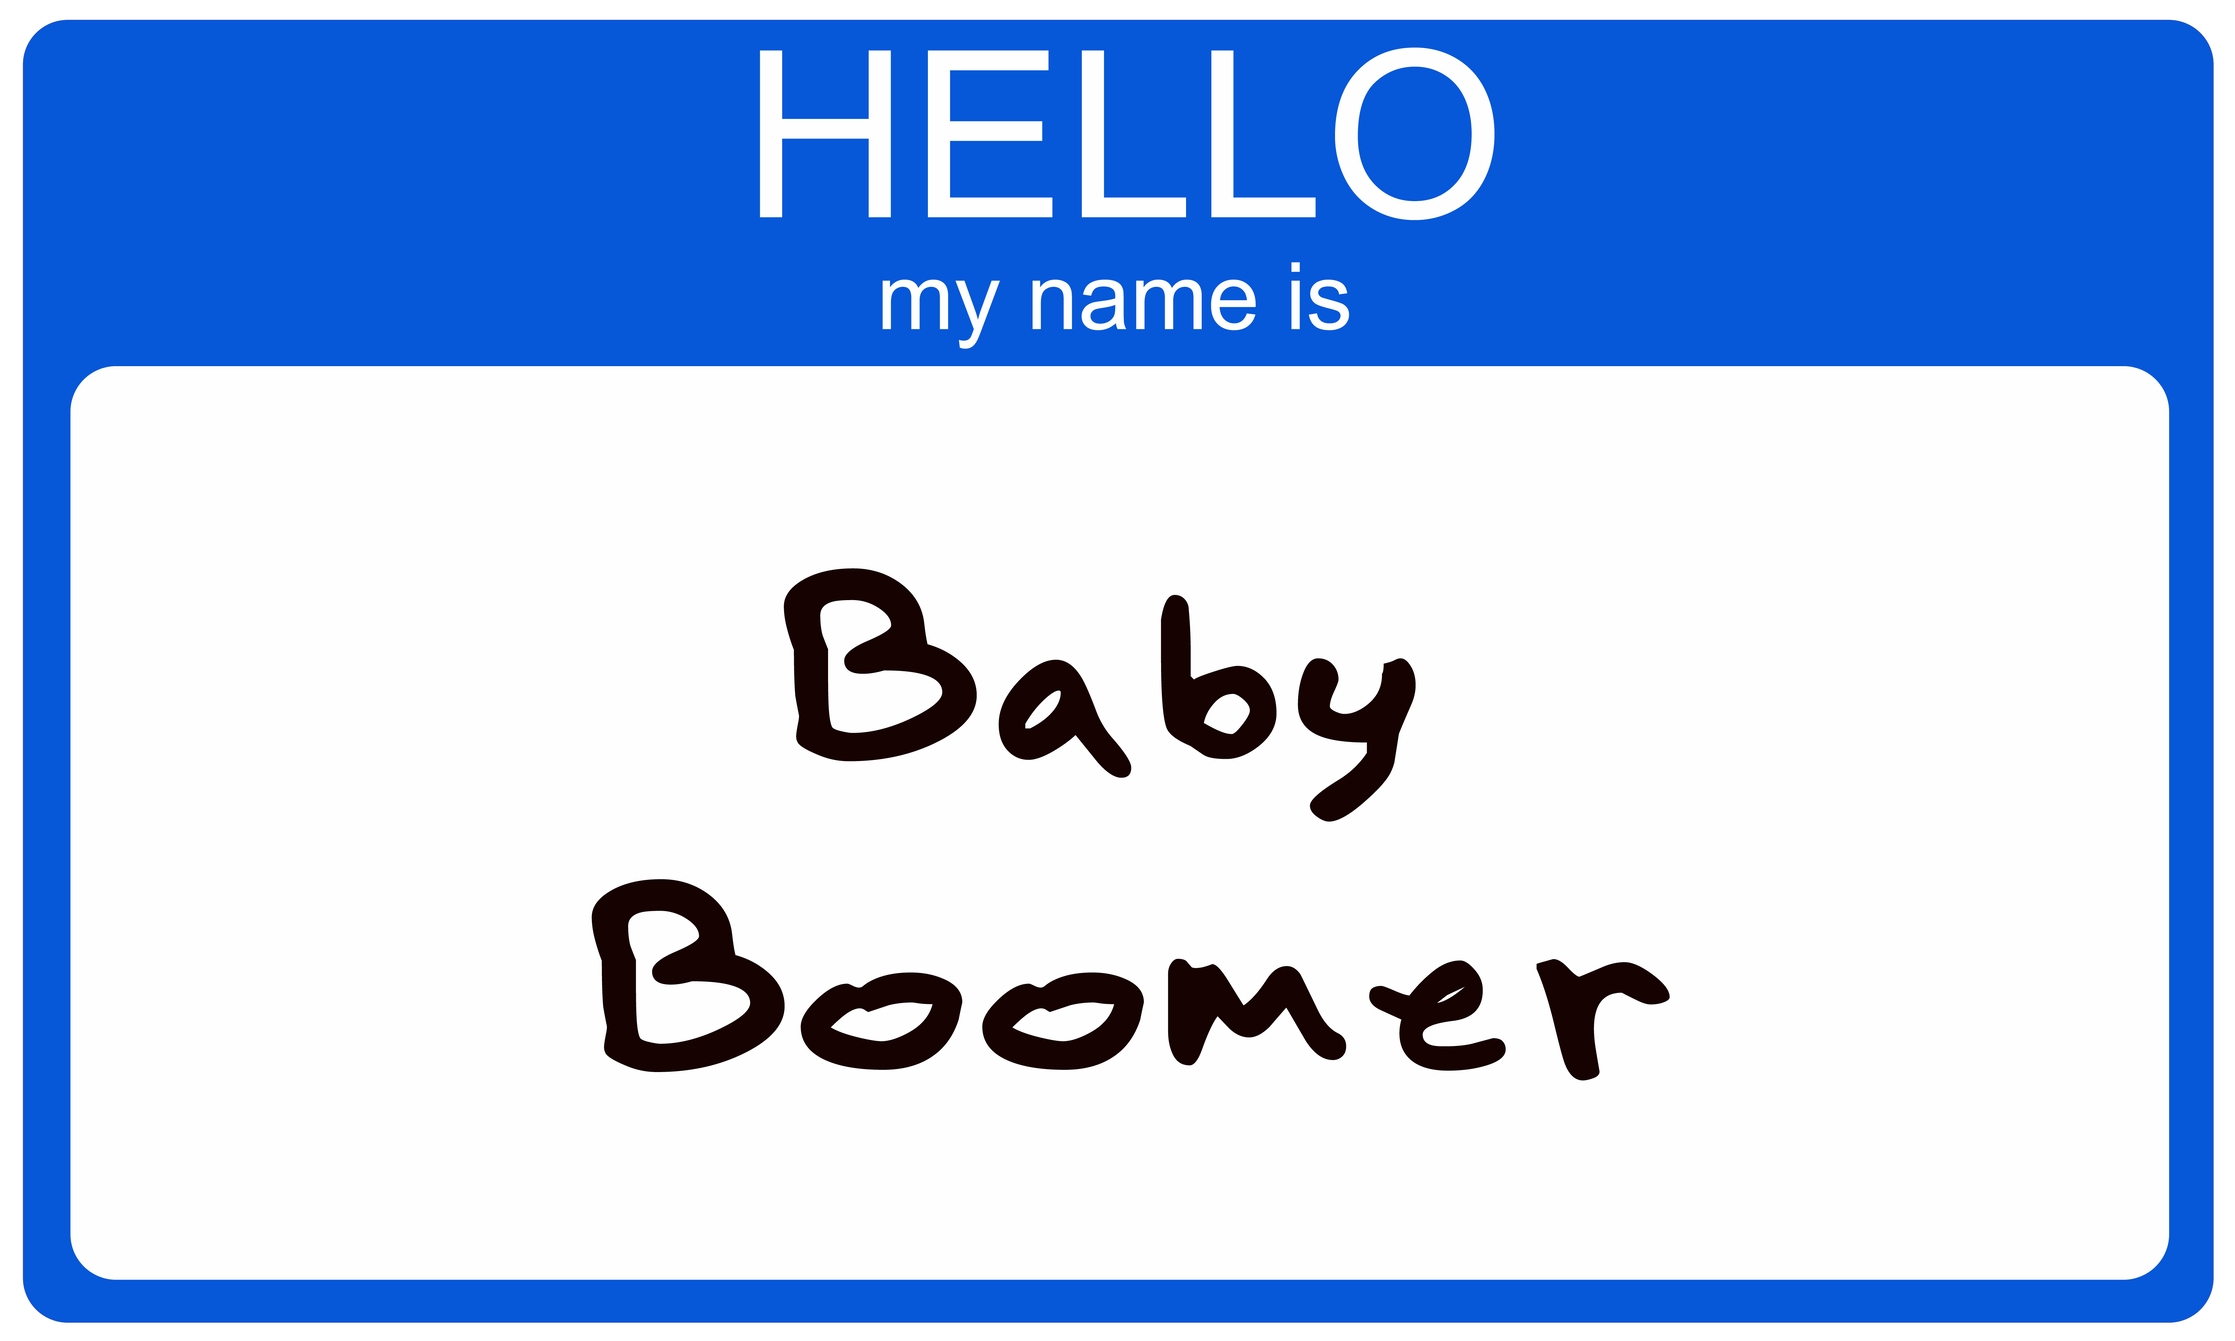 OK Boomer
